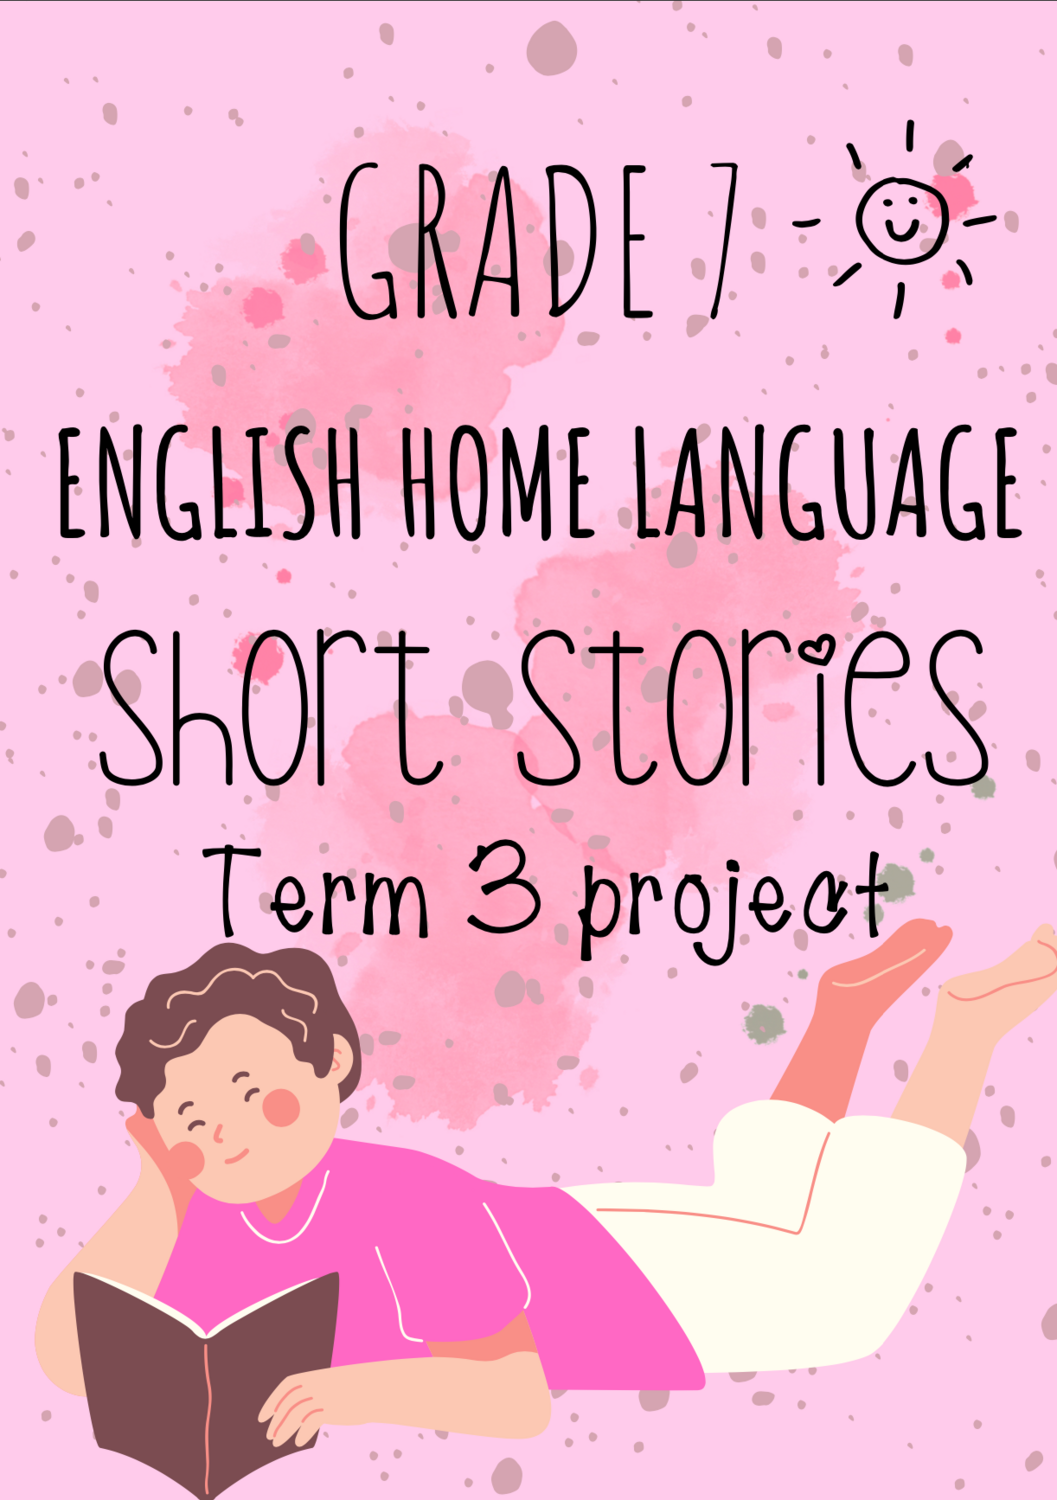 grade-7-english-home-language-facilitator-s-guide-1-of-2-by-impaq-issuu